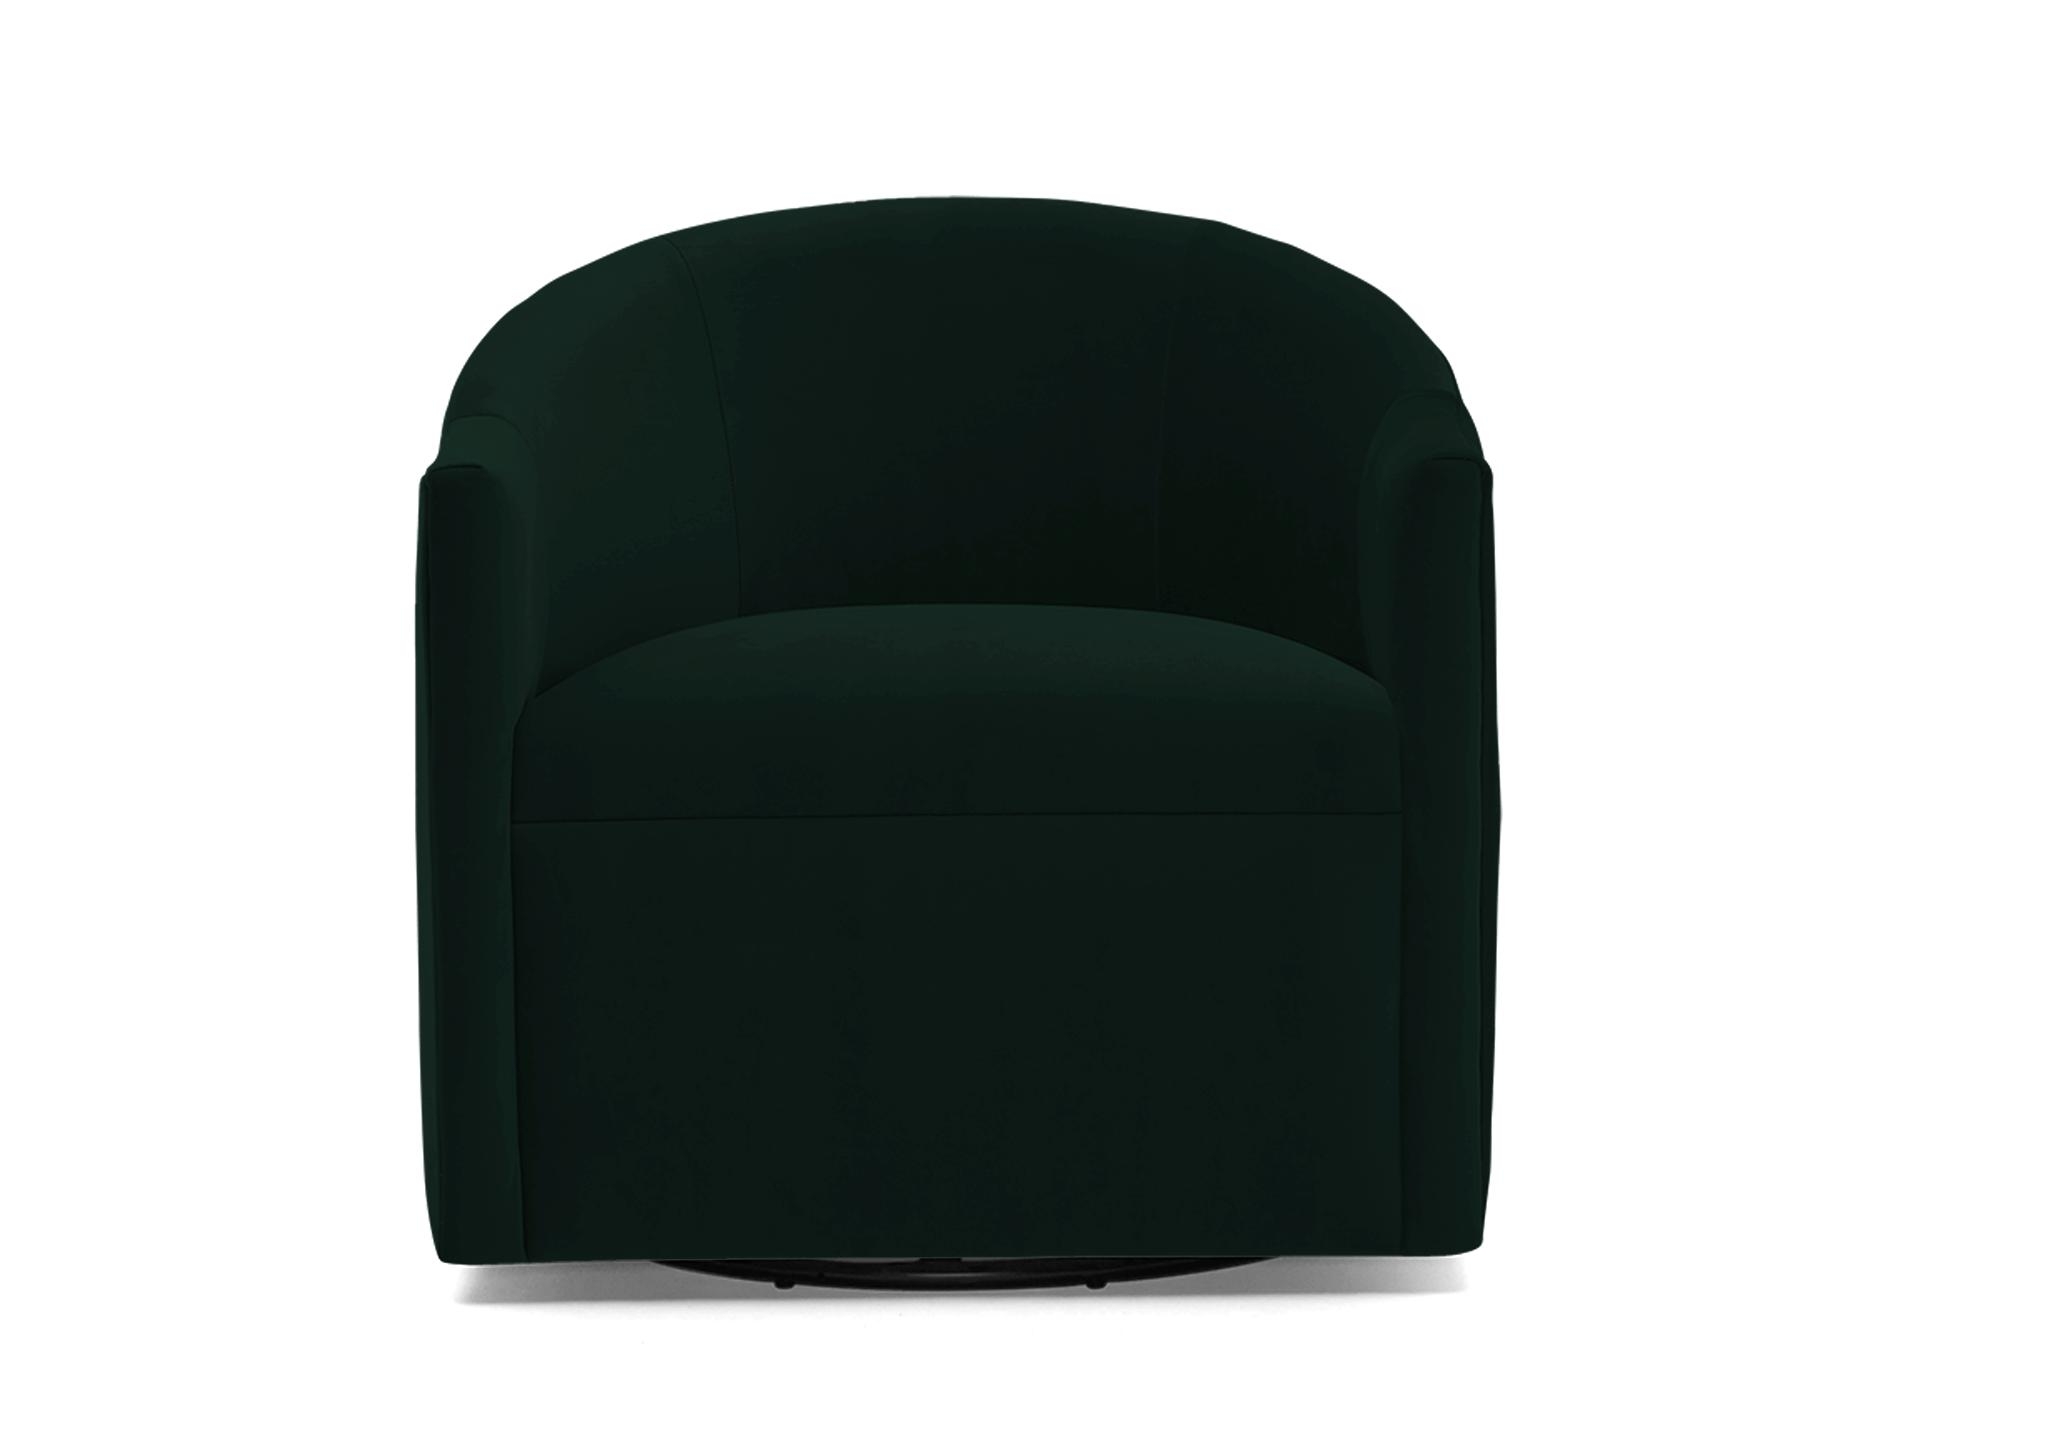 Green Jolie Mid Century Modern Swivel Chair - Royale Evergreen - Image 1